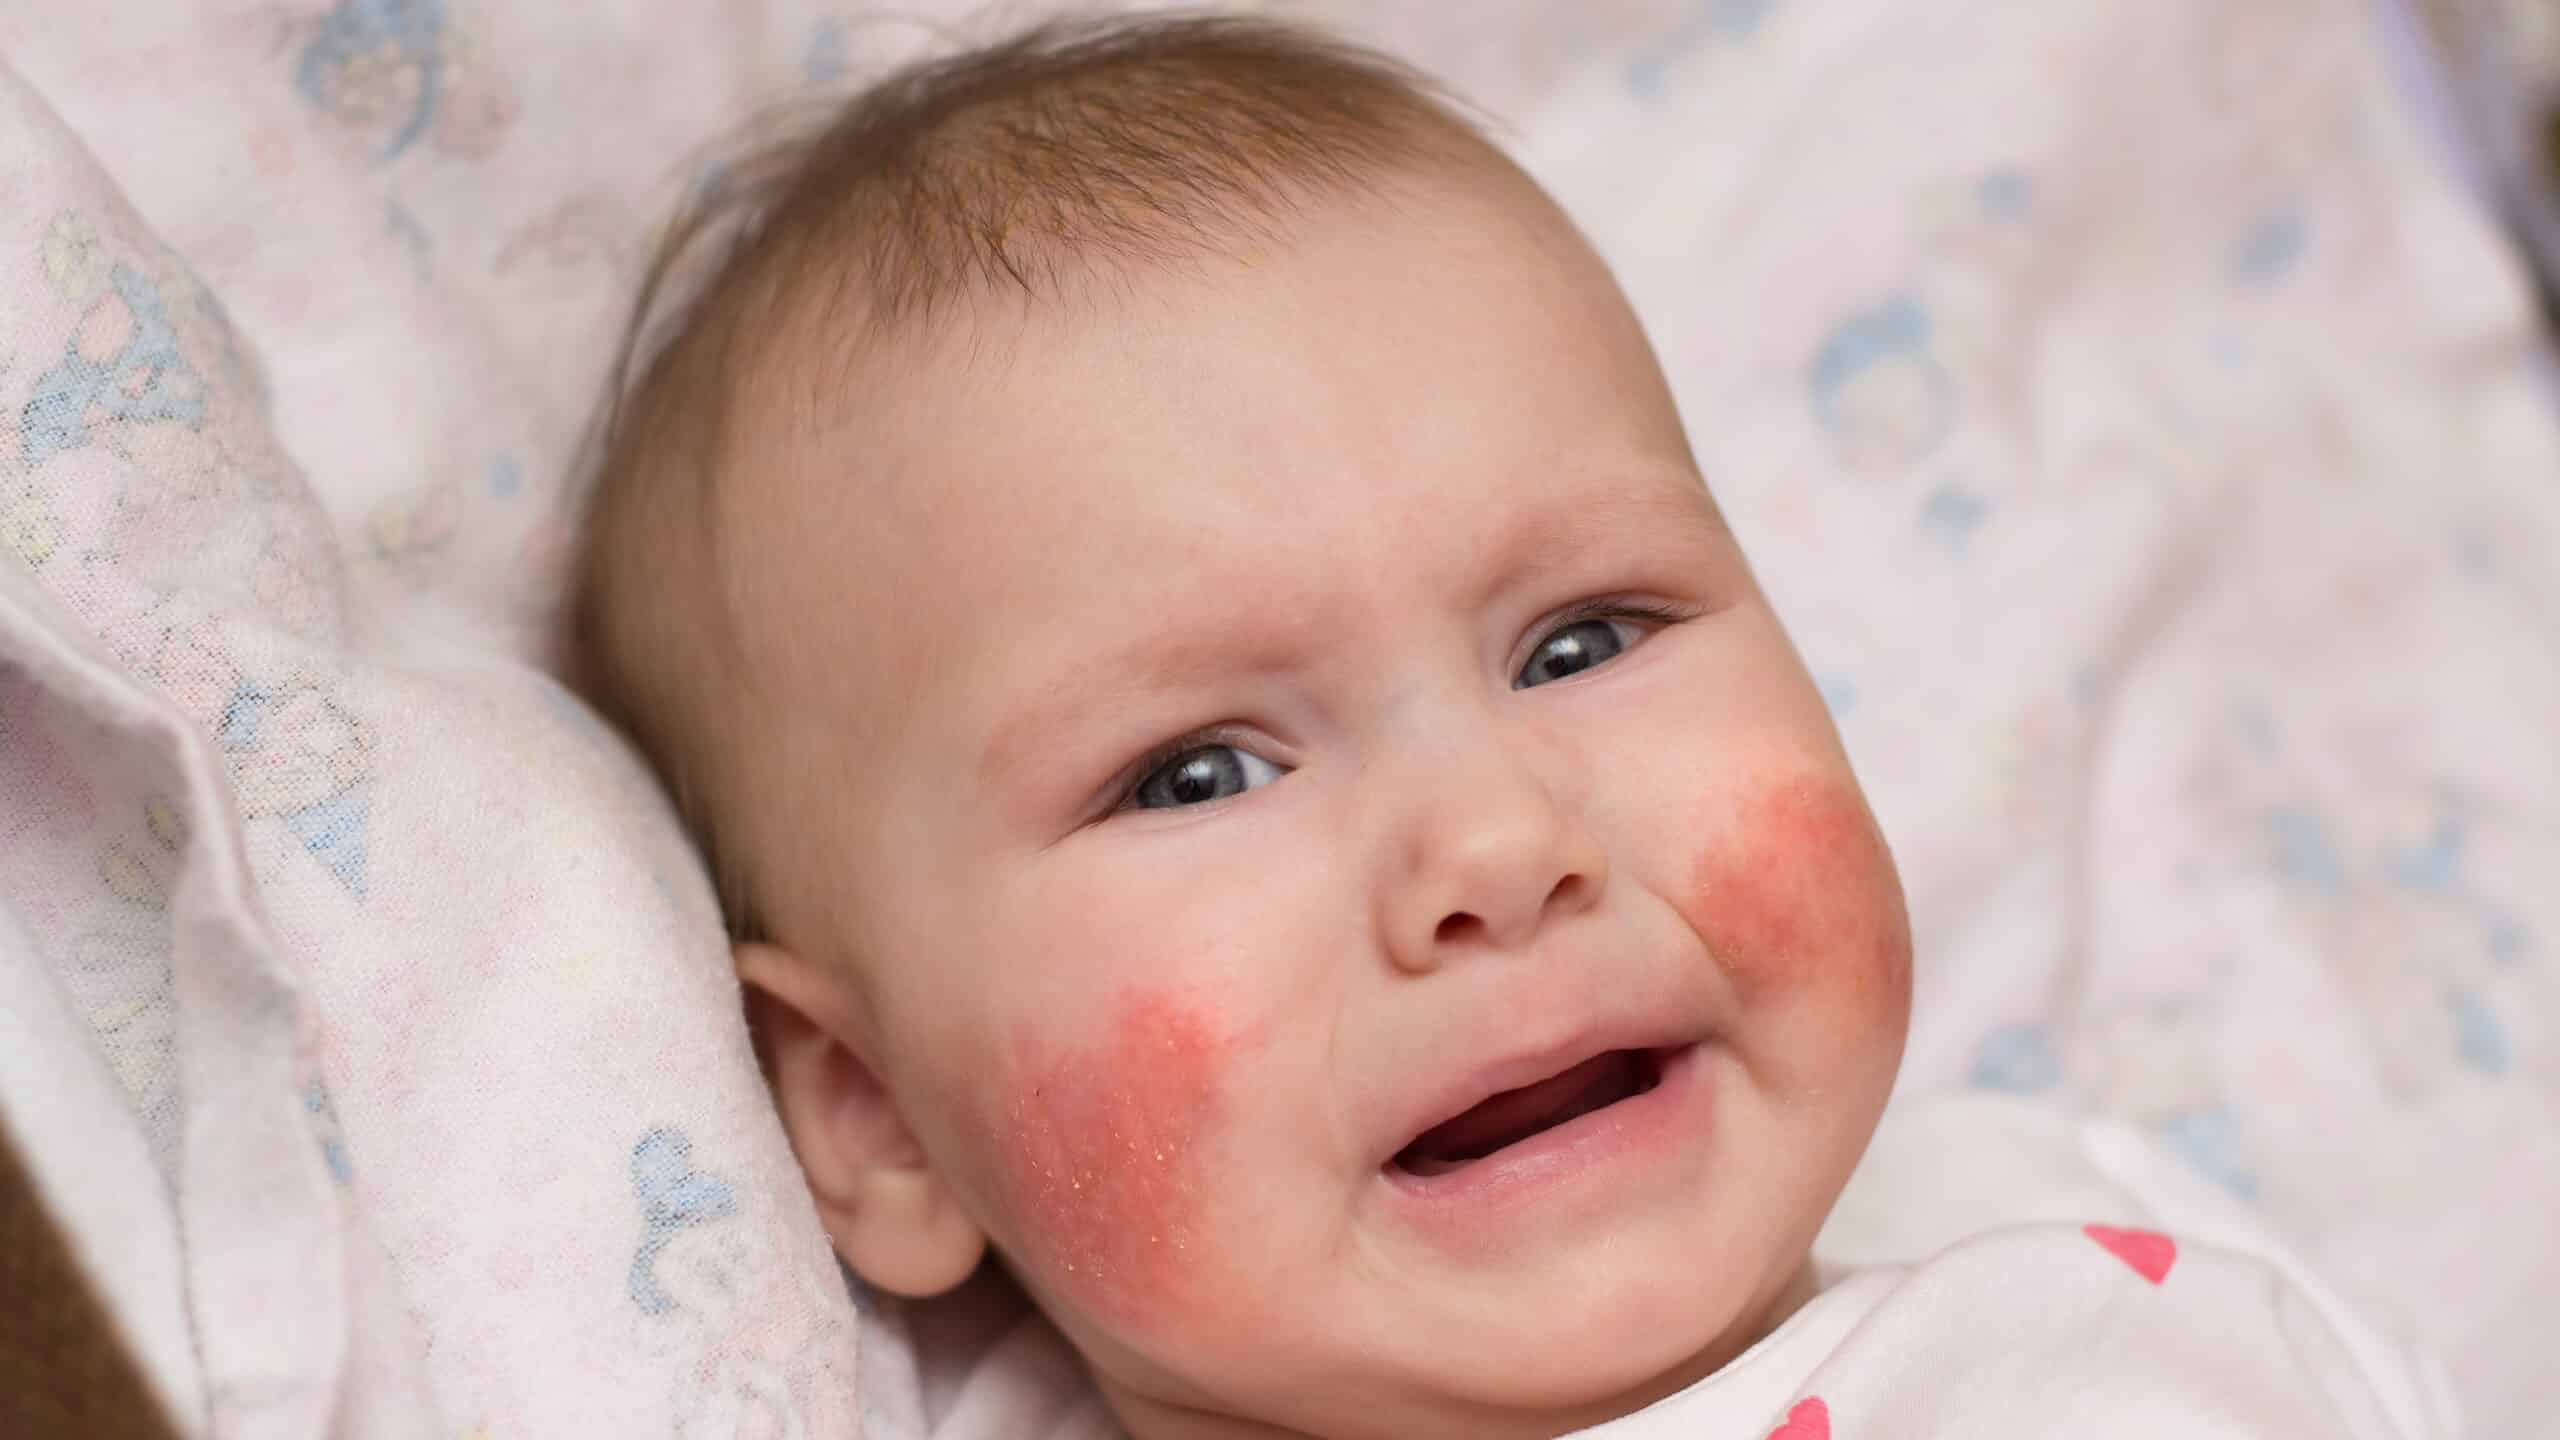 Baby with eczema on cheeks.